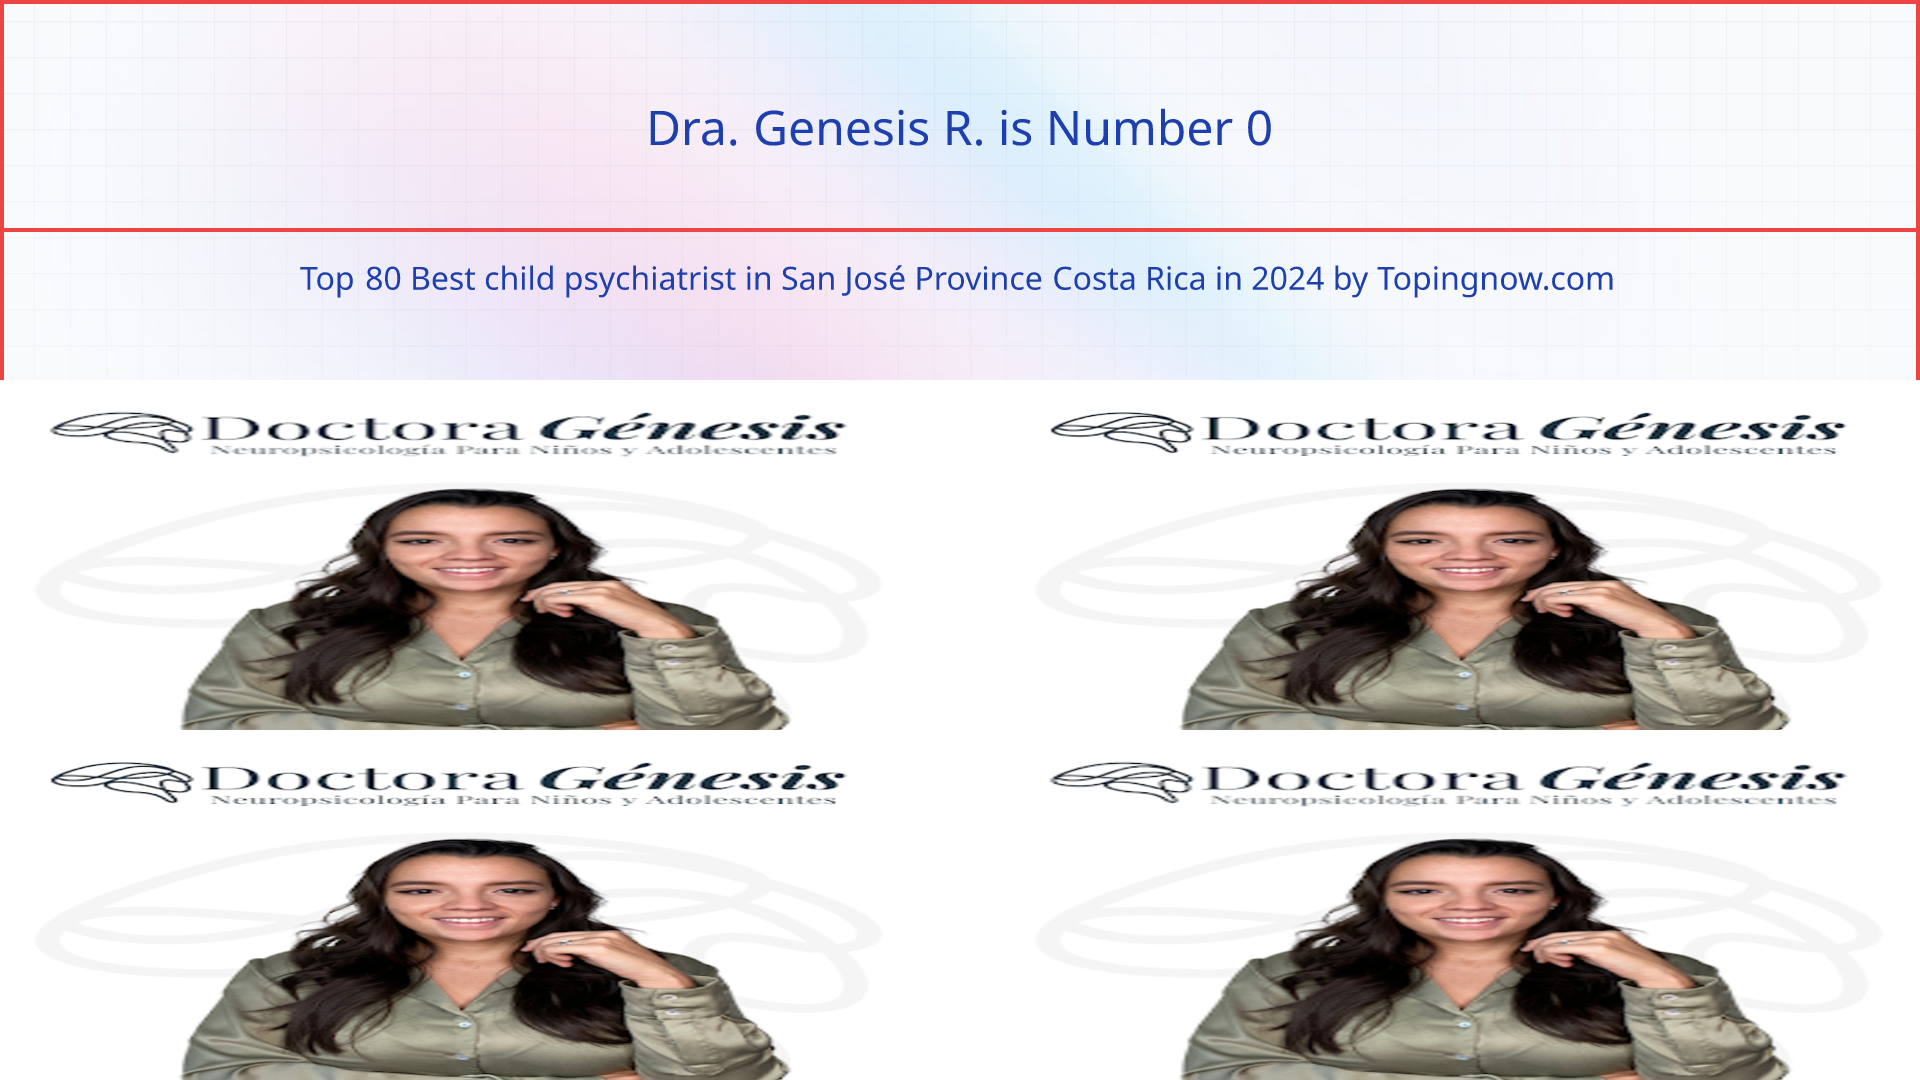 Dra. Genesis R.: Top 80 Best child psychiatrist in San José Province Costa Rica in 2024